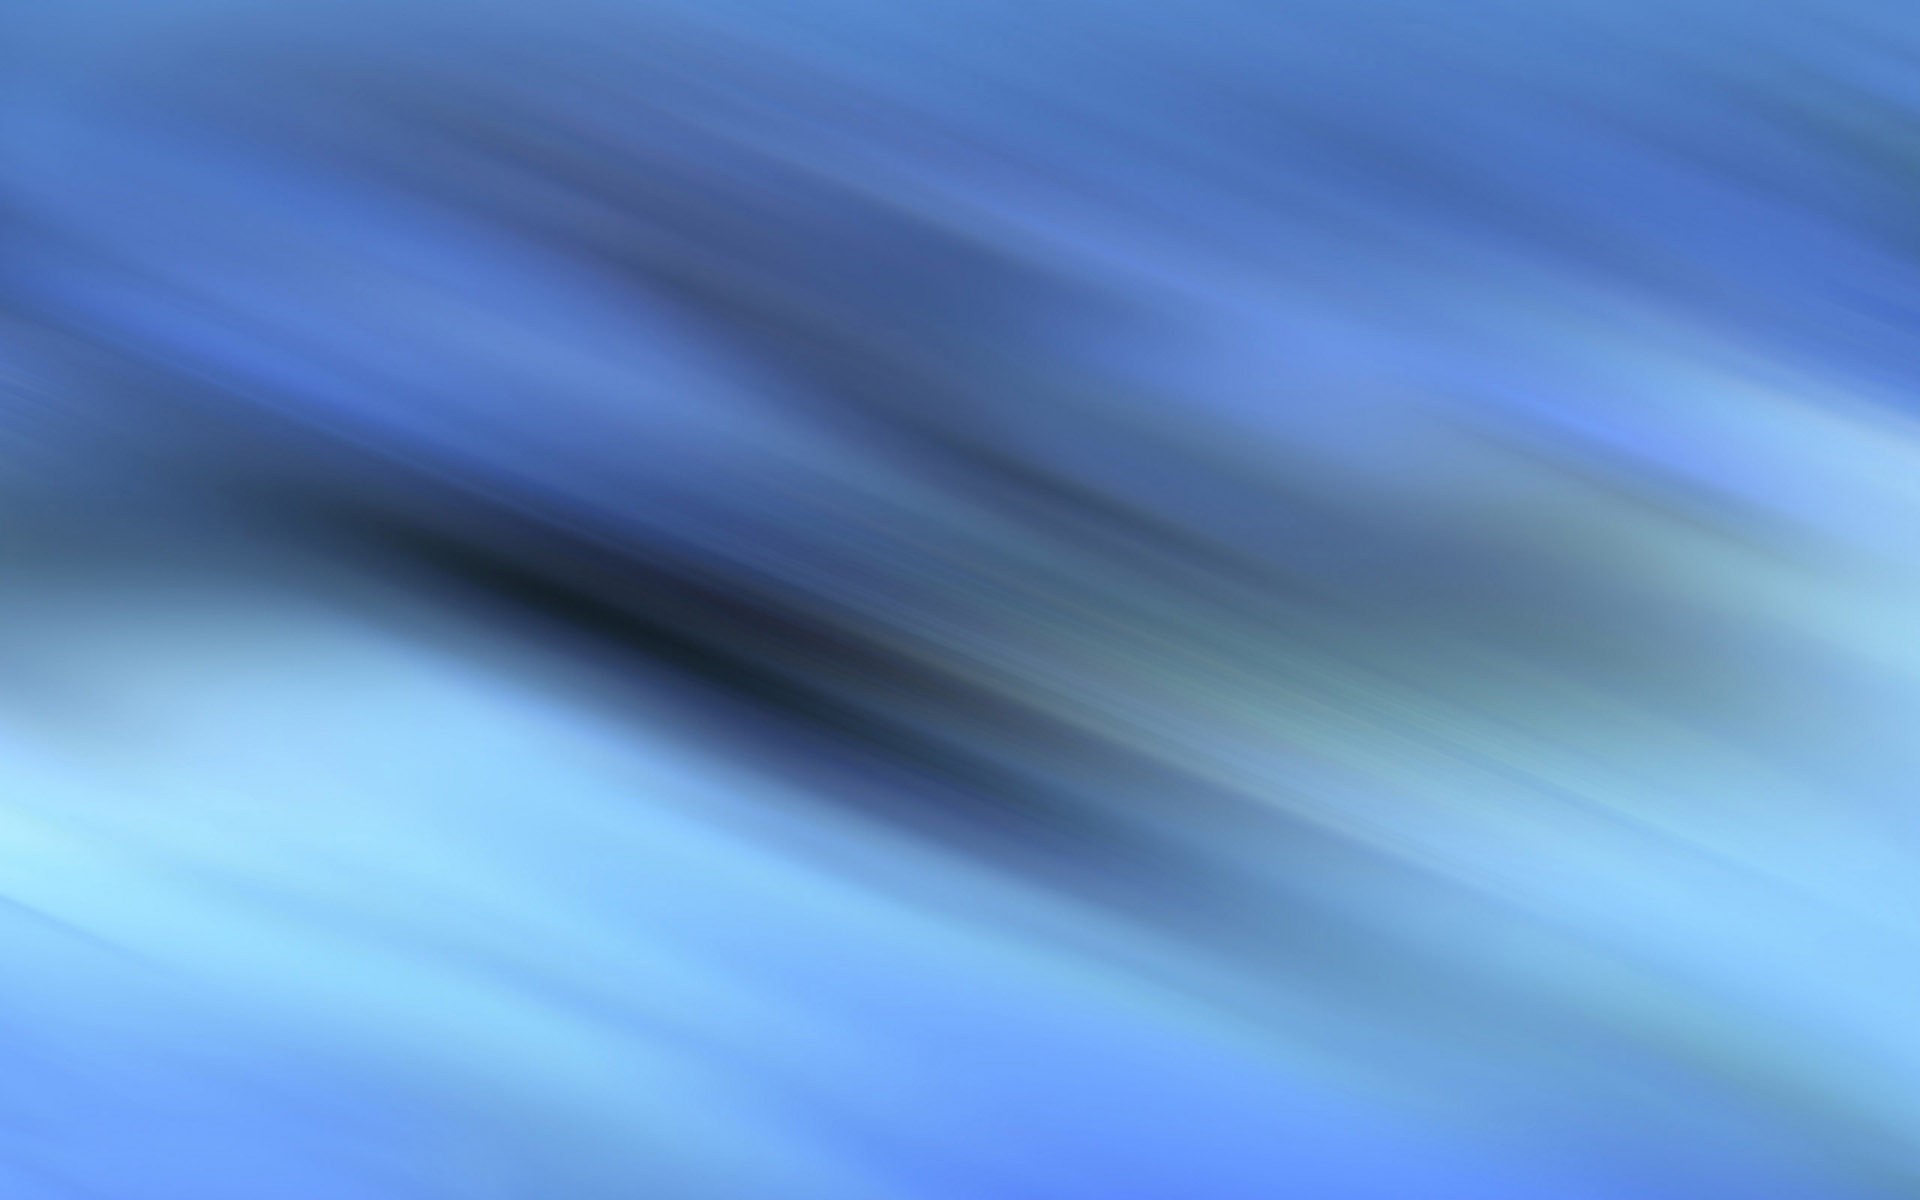 Blurred Lines Blue Background